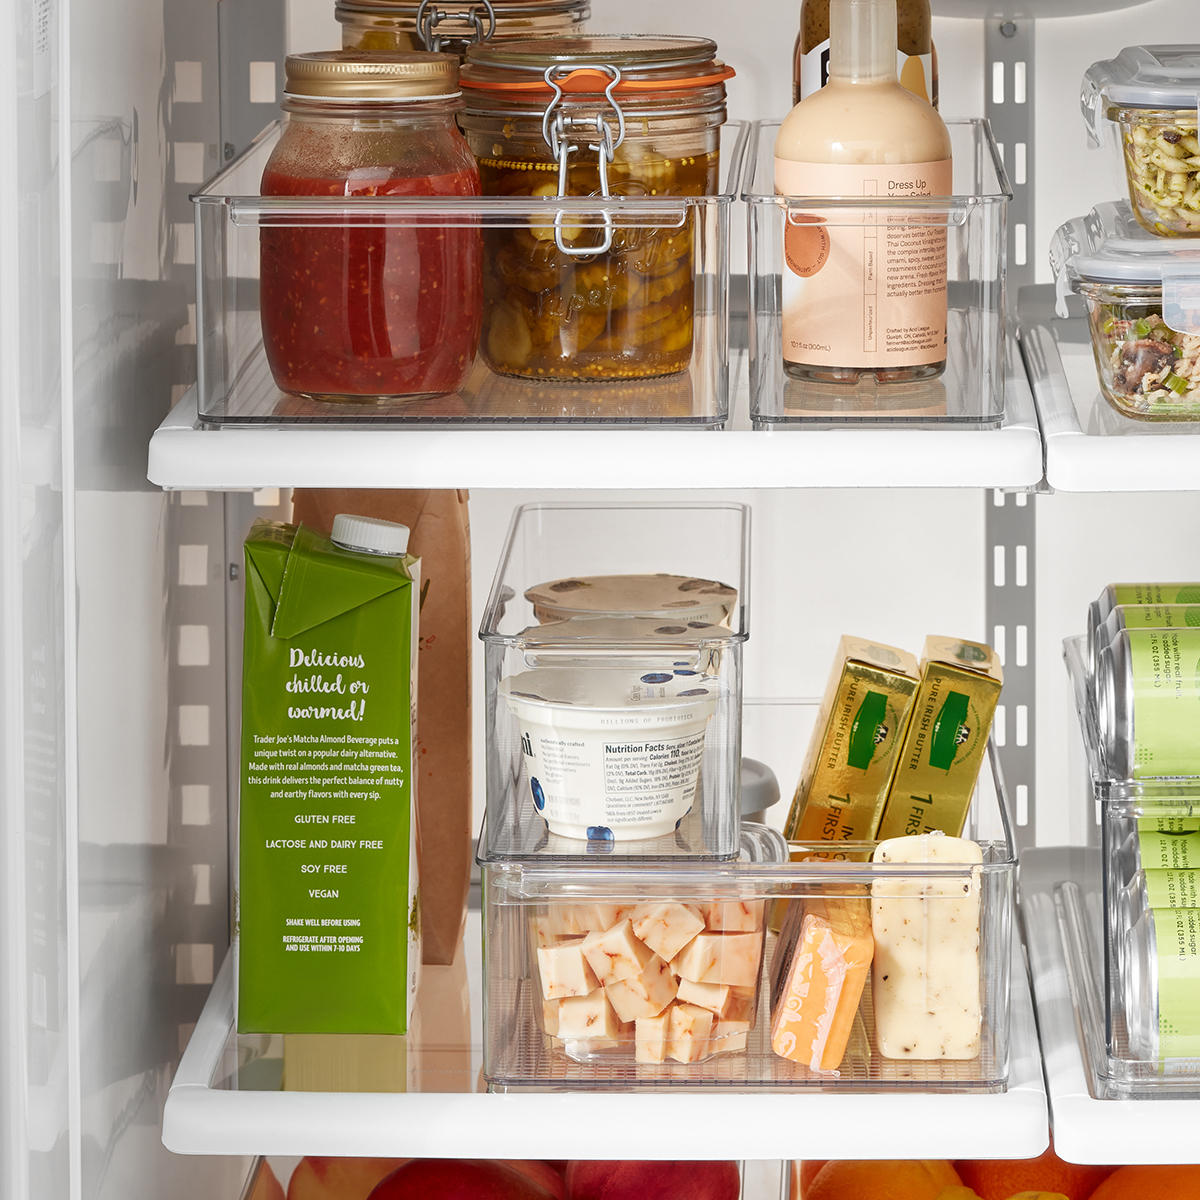 Heyuzb Set of 8 Refrigerator Organizer Bins - 4 Large and 4 Medium Stackable Plastic Clear Food Storage Bin with Handles for Pantry, Freezer, Fridge